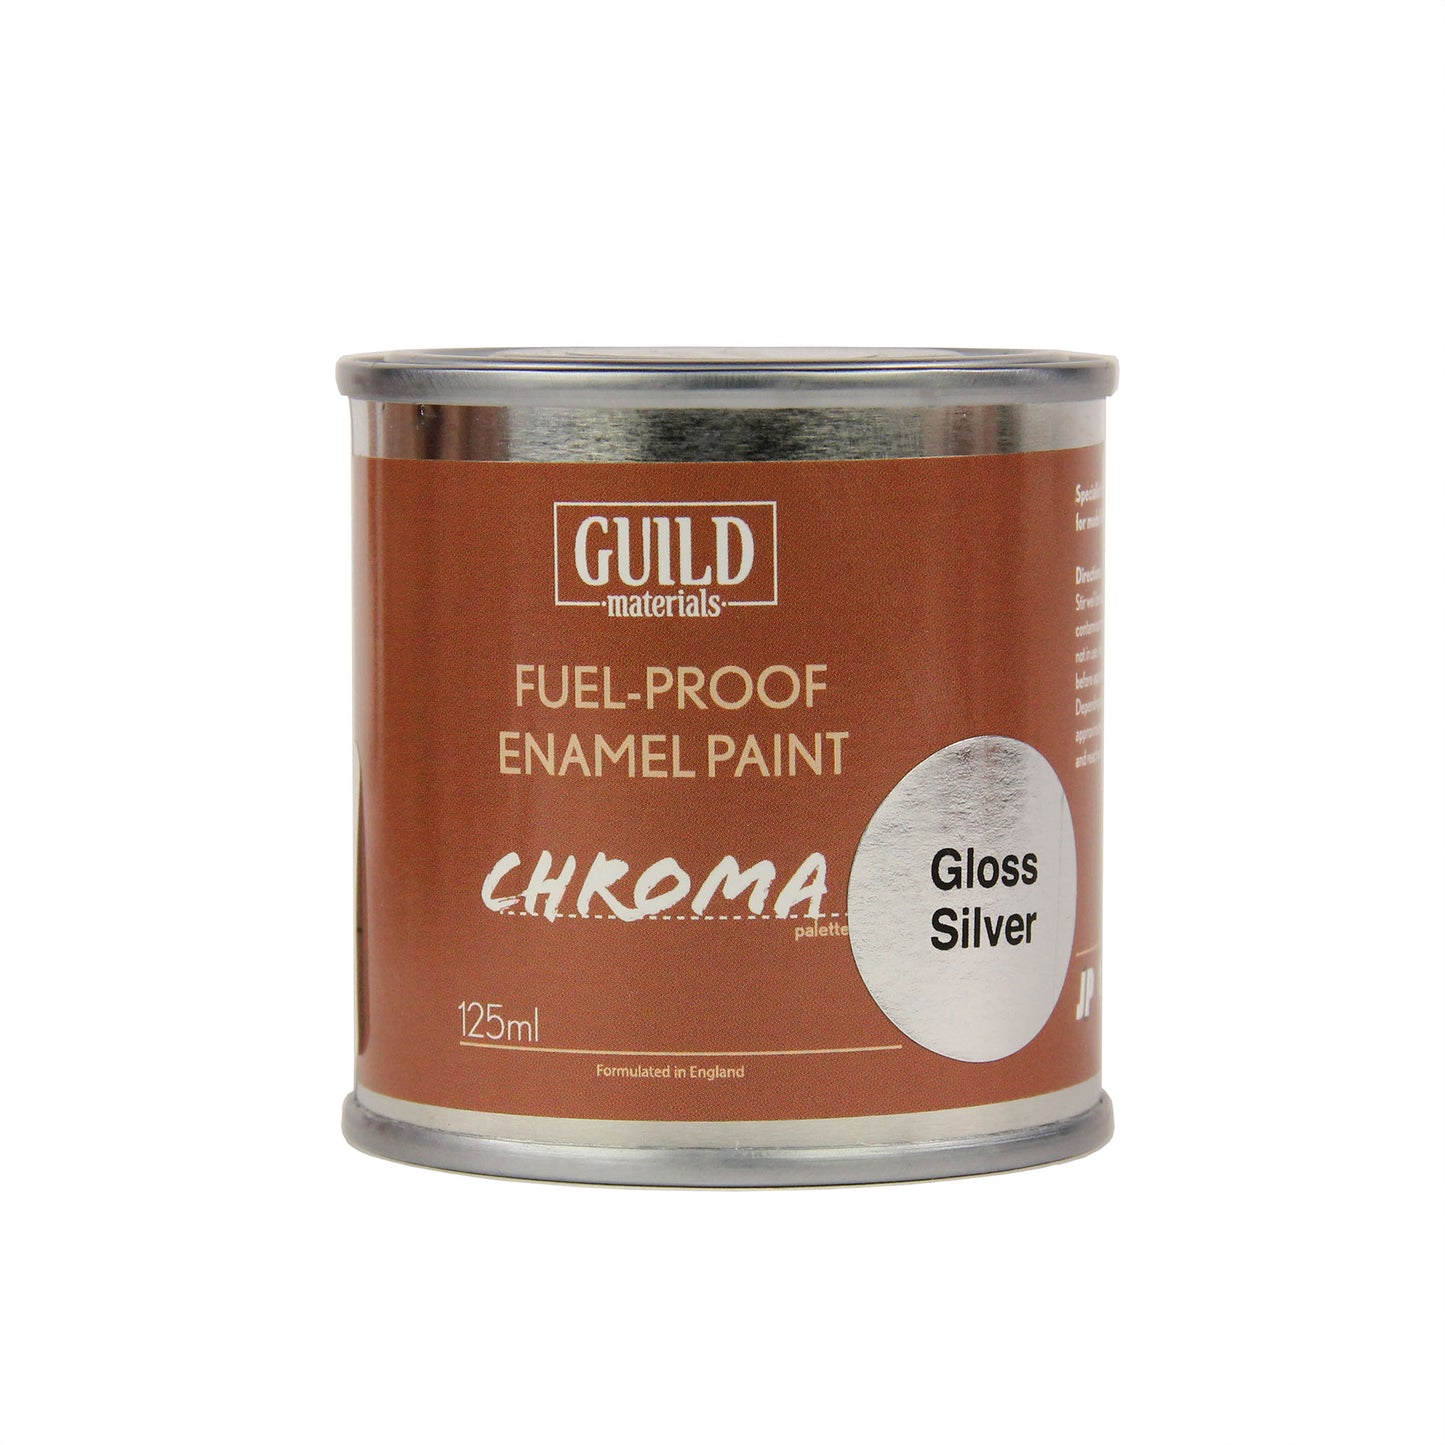 Chroma Enamel Fuelproof Paint Gloss Silver (125ml Tin)